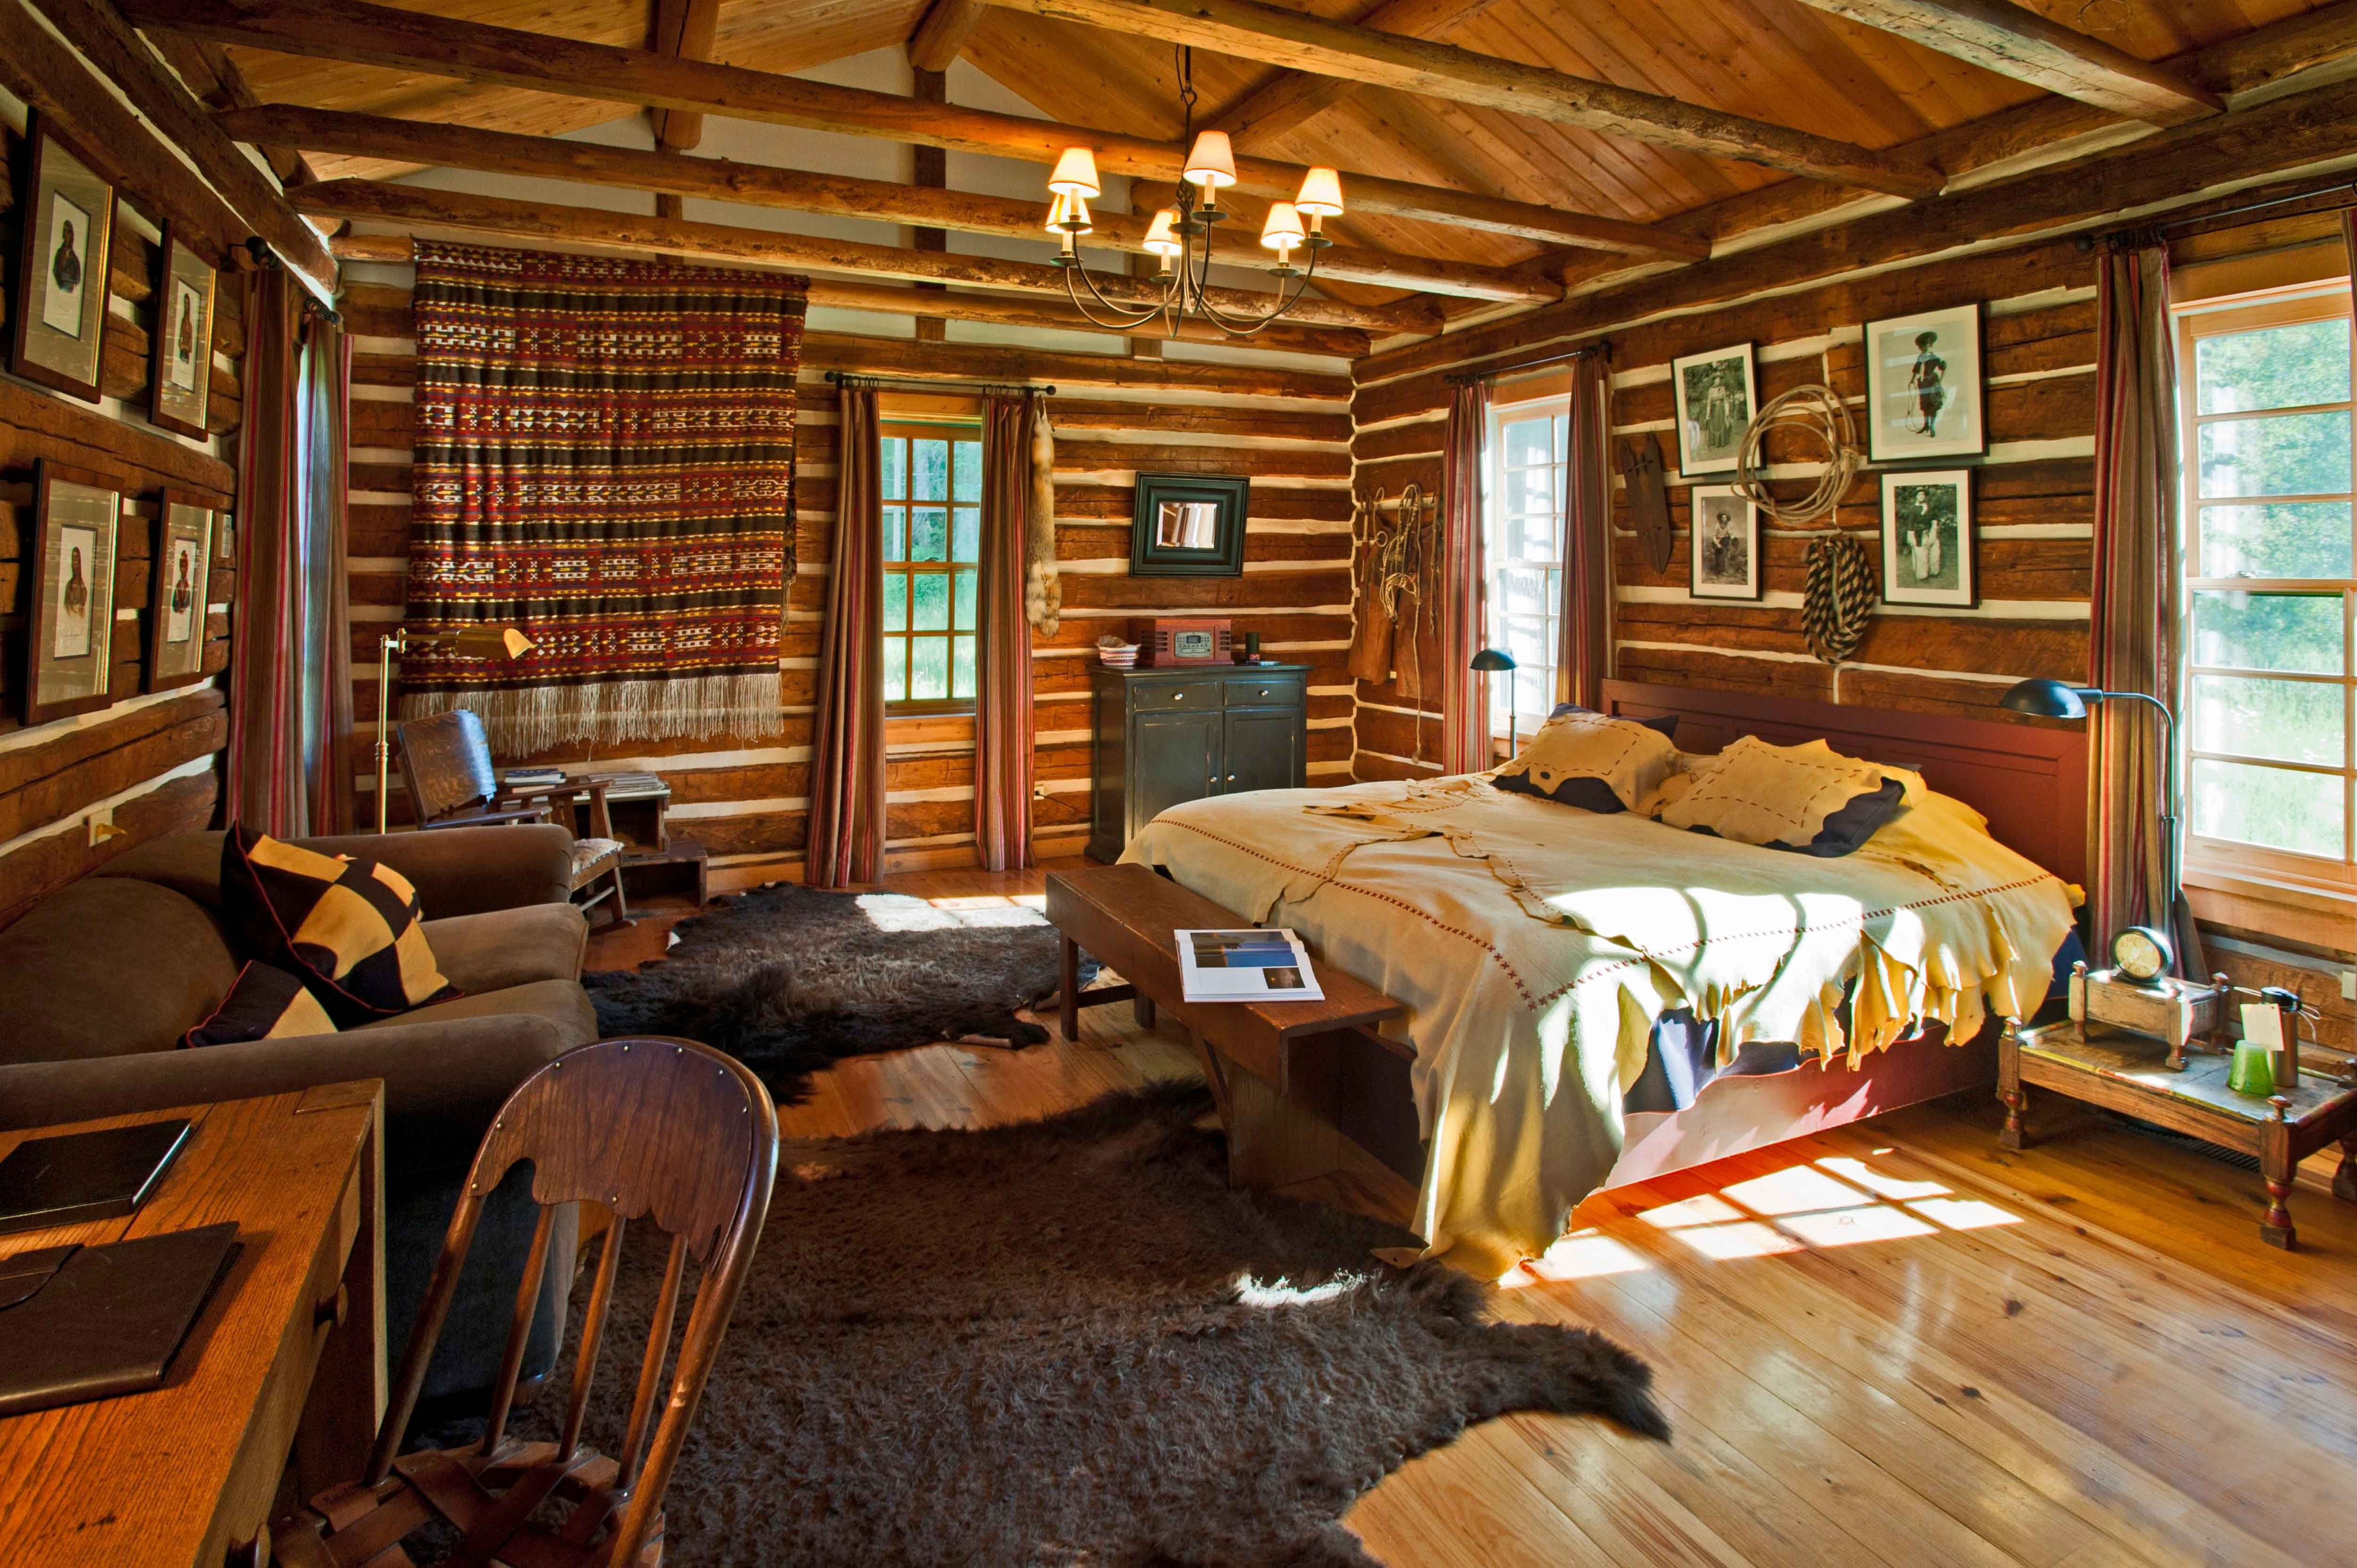 Inside room. Американский стиль Кэбин. Стиль Кантри ранчо. Канадская Хижина Корнер. Комната в деревенском стиле.